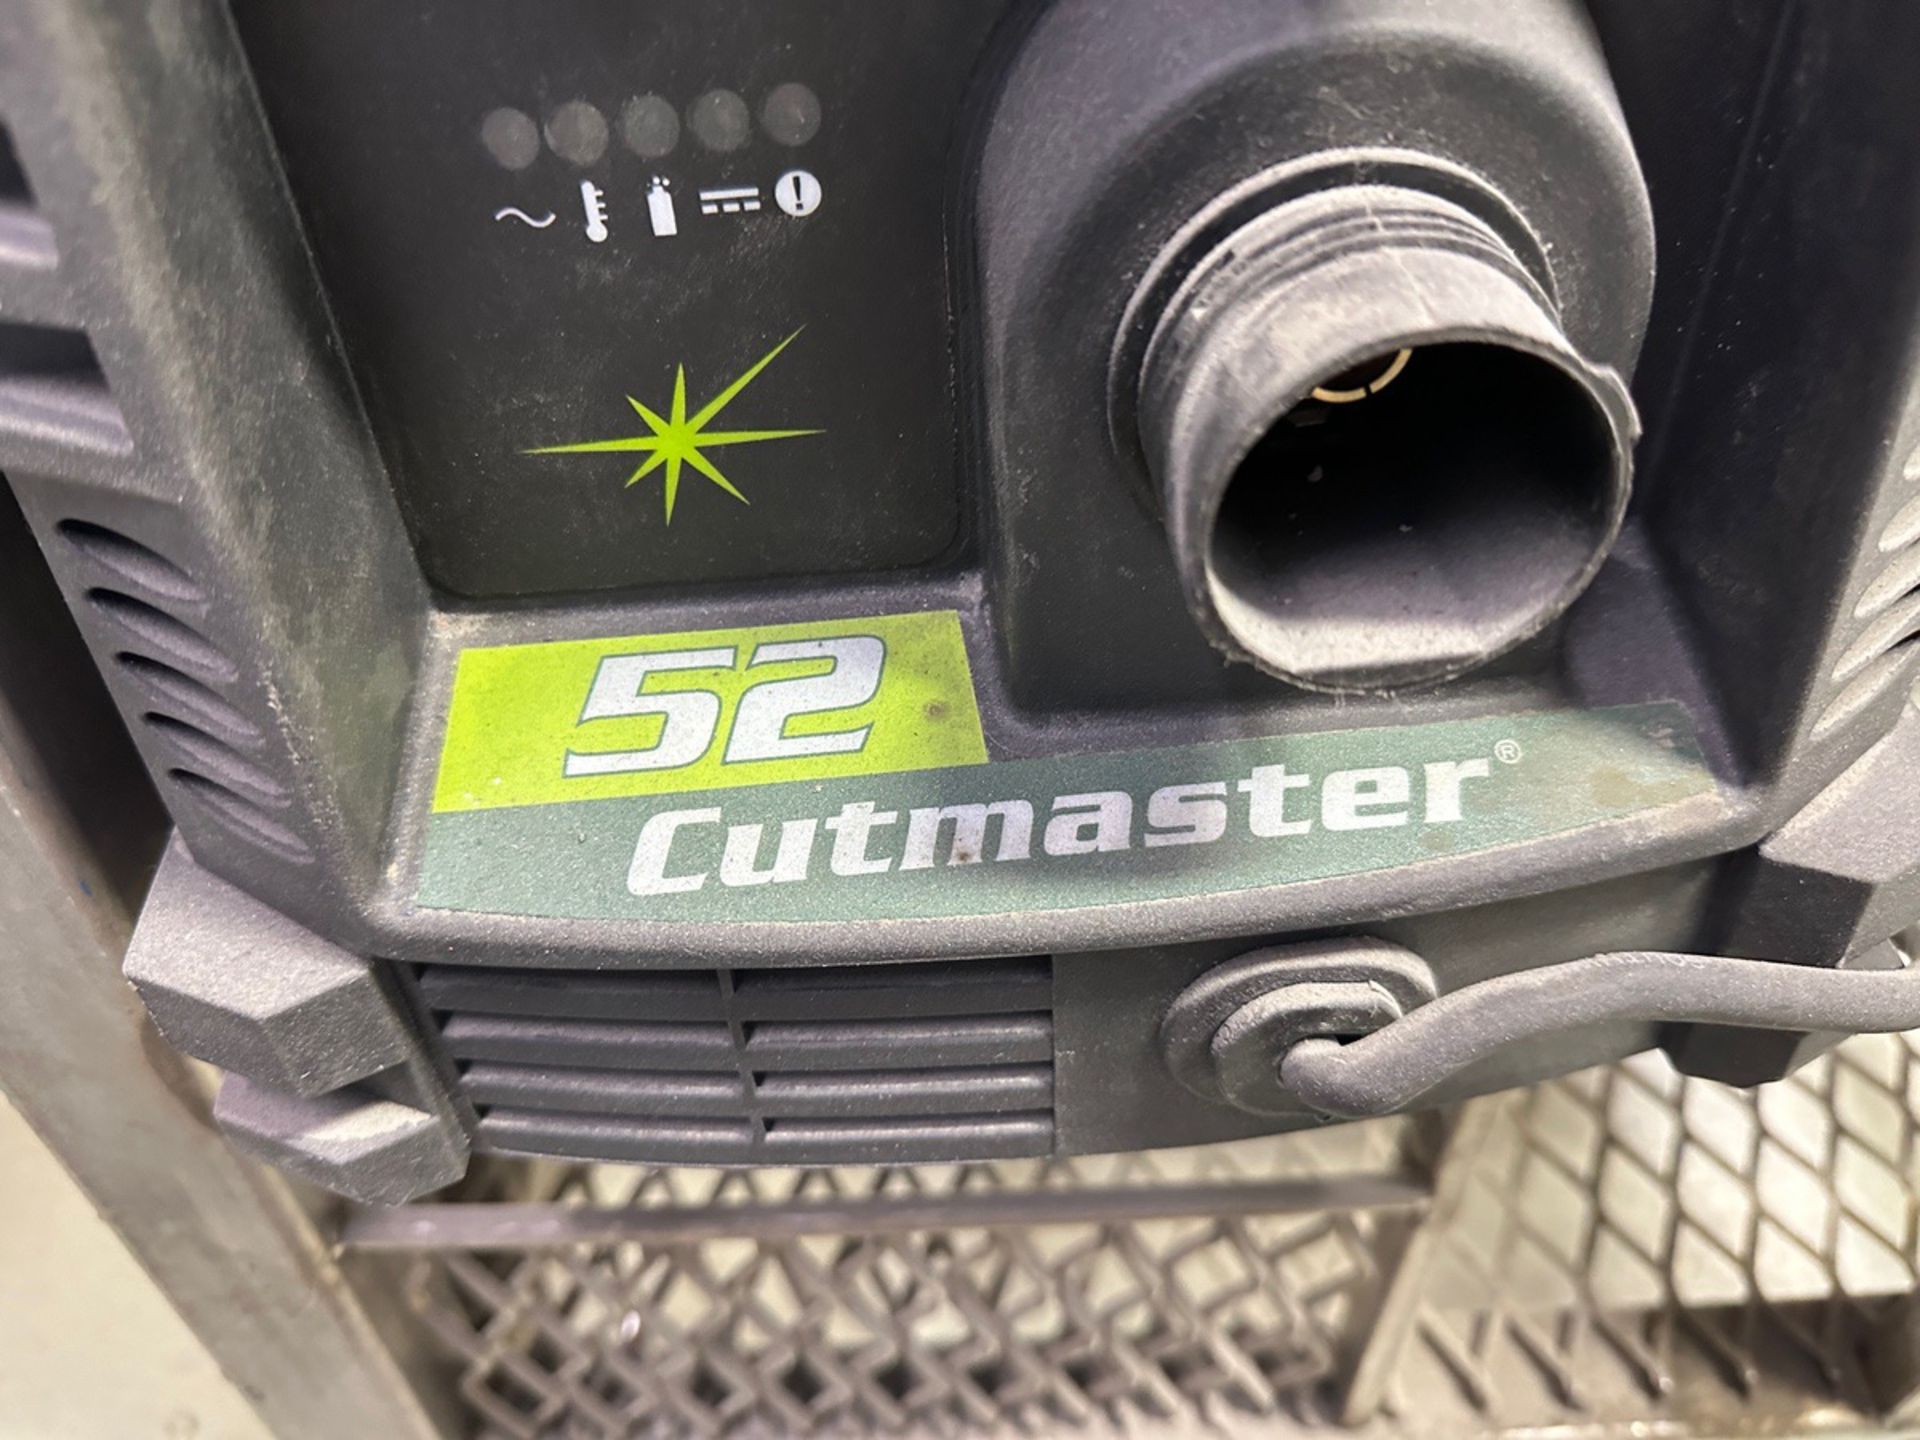 Cutmaster 52 Plasma Cutter | Rig Fee $35 - Image 2 of 3